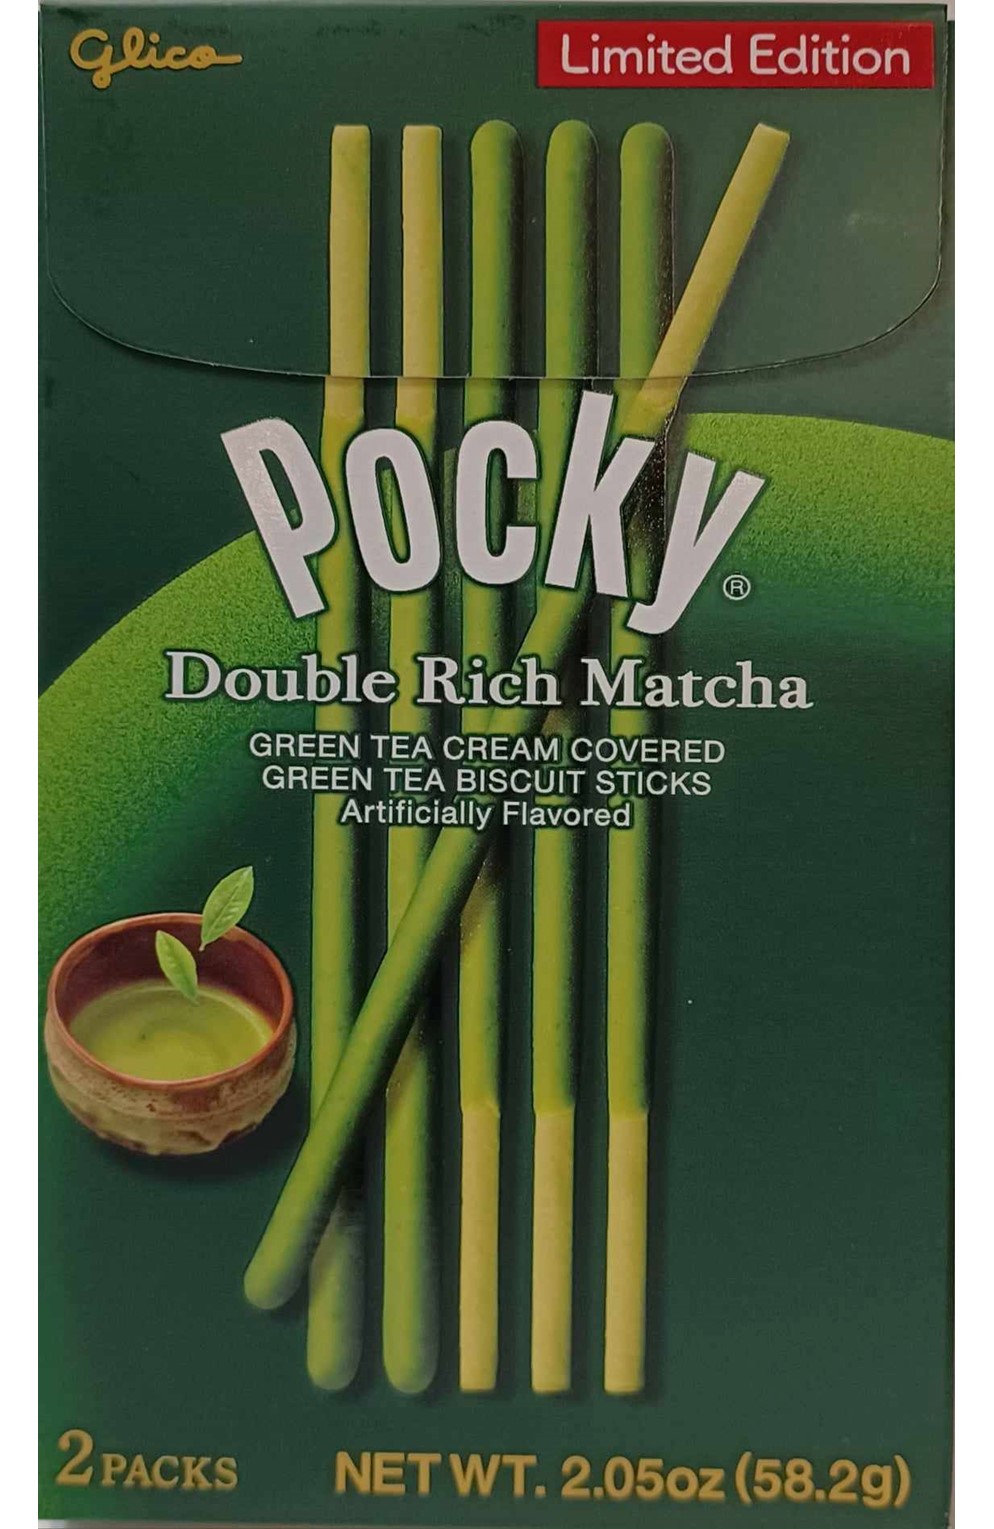 Glico Pocky Double Rich Matcha Limited Edition 2.05Oz Box